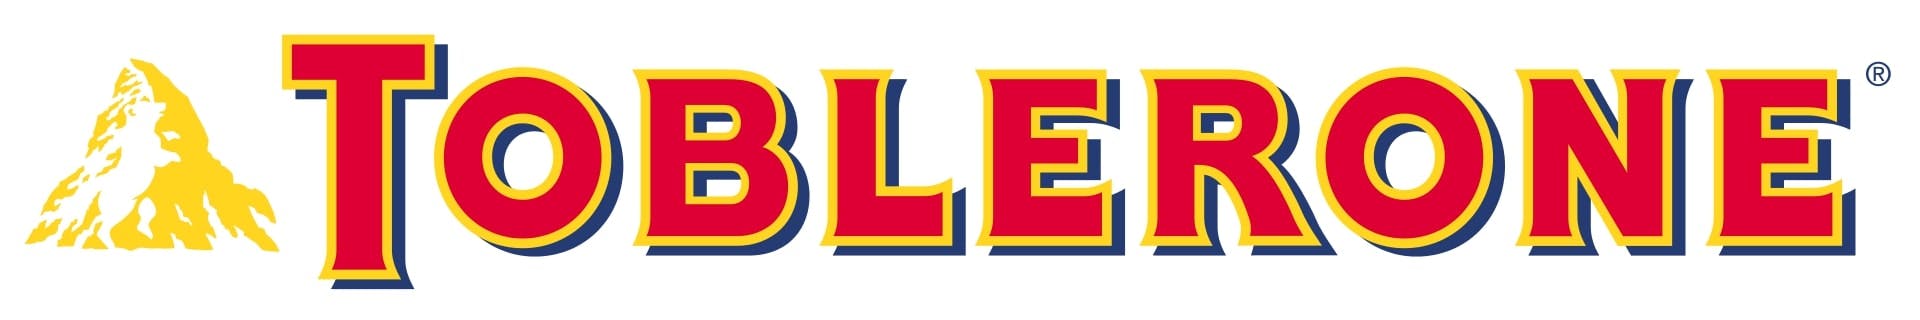  toblerone brand logo design